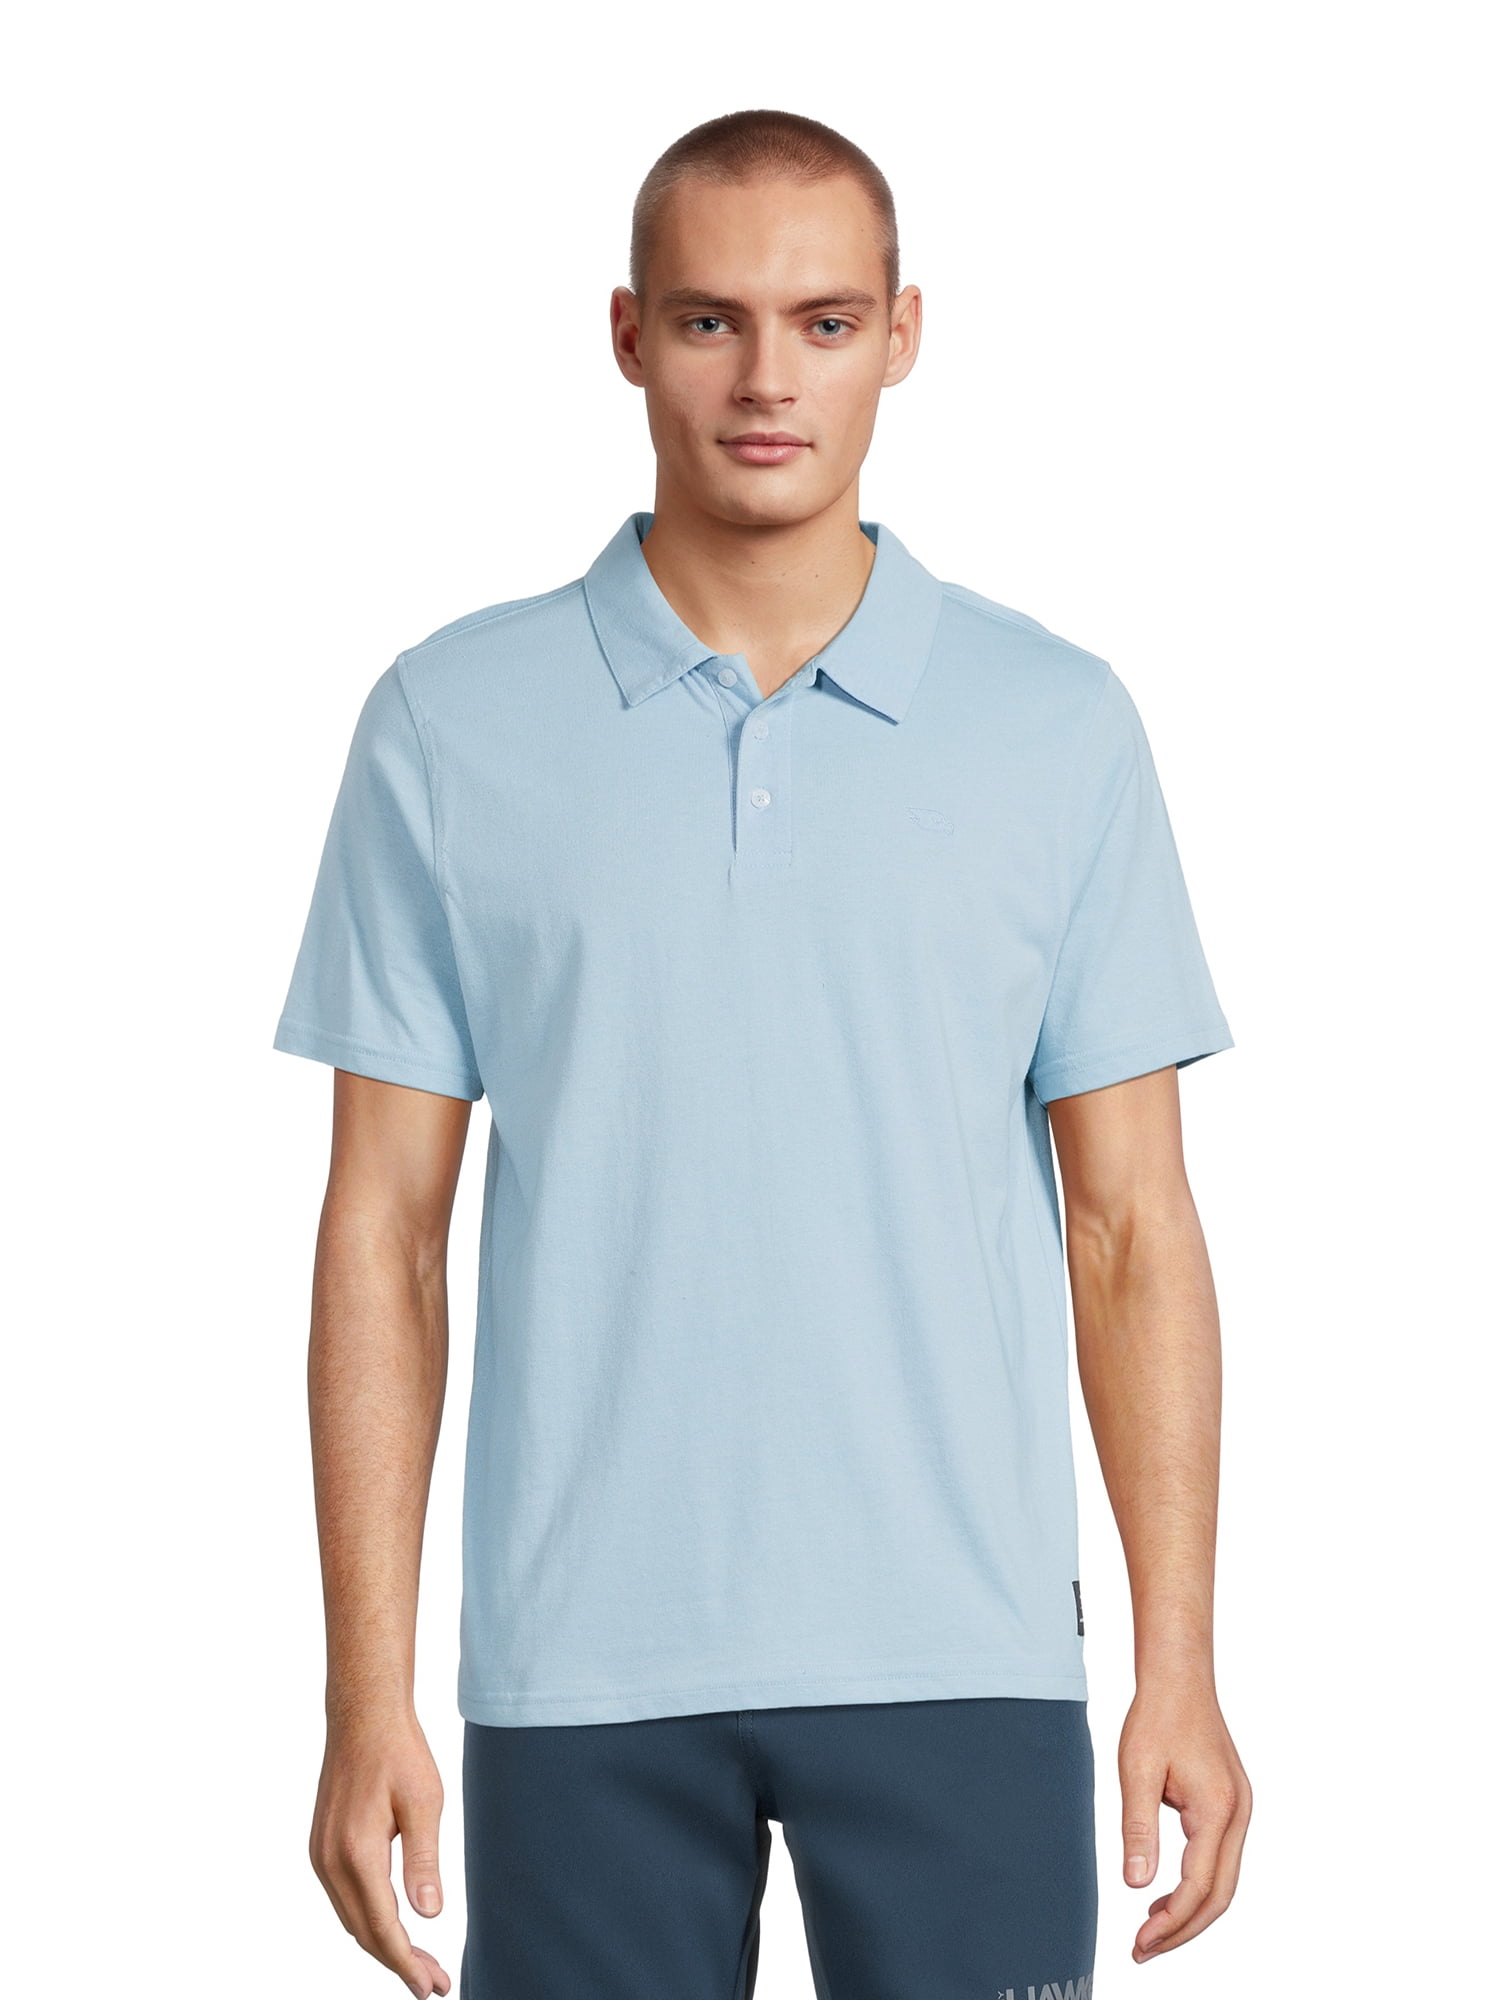 Tony Hawk Men's Polo Shirt with Short Sleeves, Sizes S-XL - Walmart.com